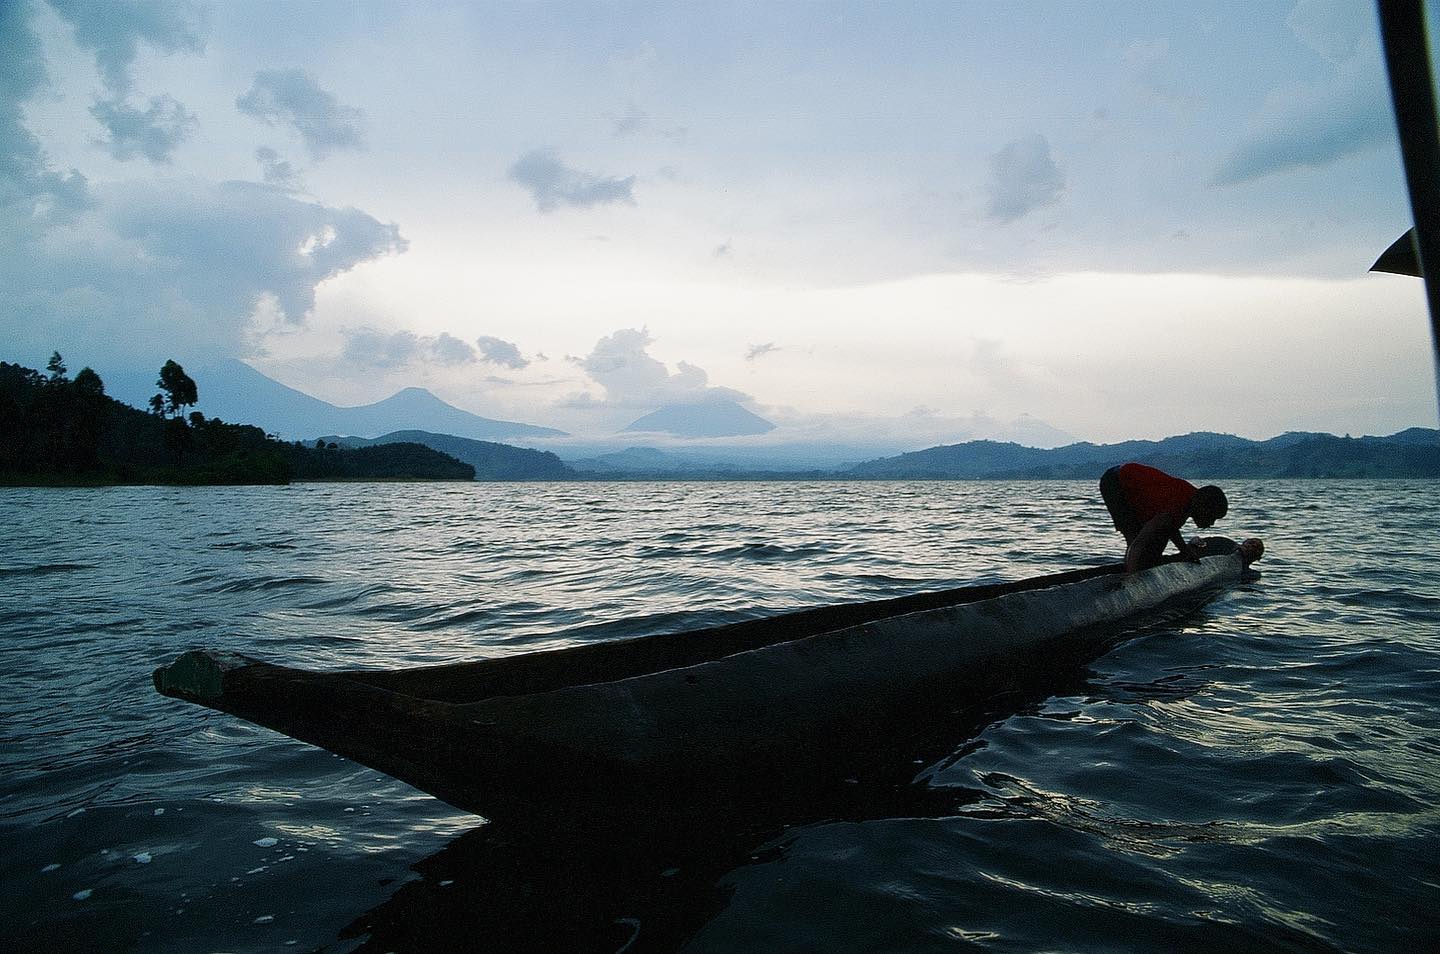 “Man and Boat” • Kodak Ektachrome E100 • Canon Rebel K2 35mm • Sigma 24-70mm f2.8 
•
•
•
#boat #treetrunk #canoe #lake #uganda #film #filmphotography #kodak #ektachrome #E100 #Uganda #Africa #sunset #photography